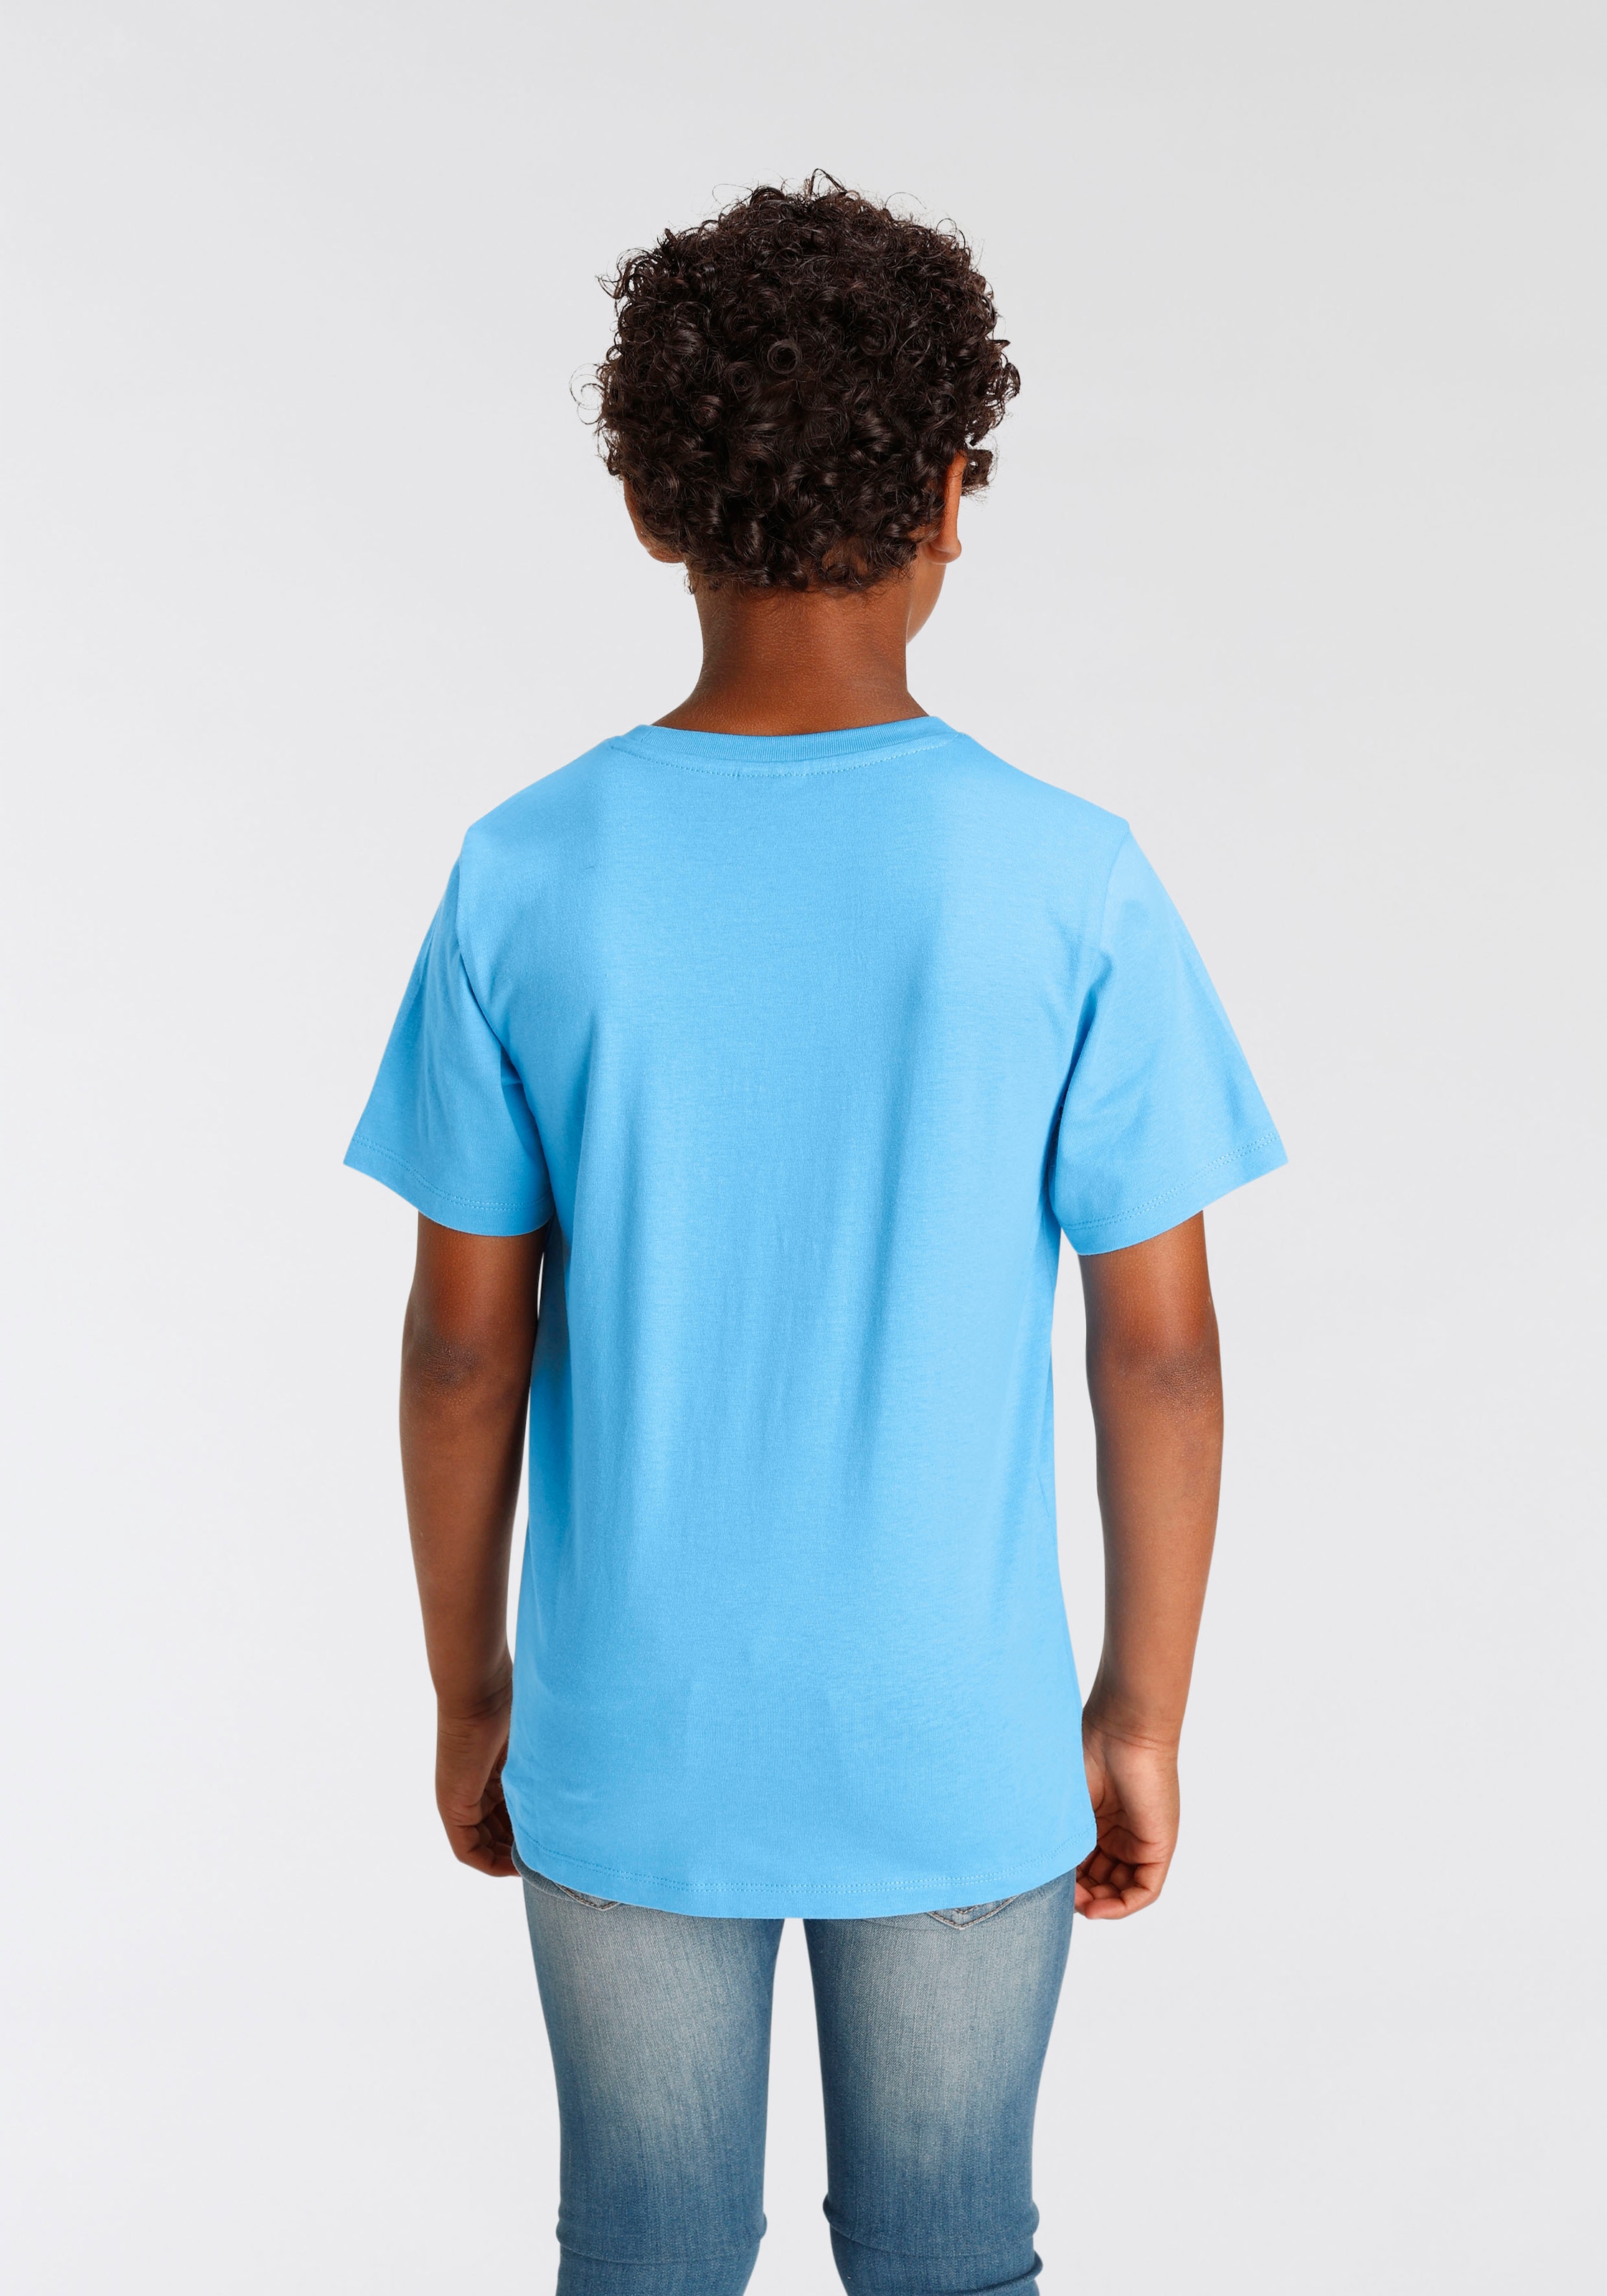 »EPIC KIDSWORLD T-Shirt | Folienprint kaufen online GAMING«, BAUR